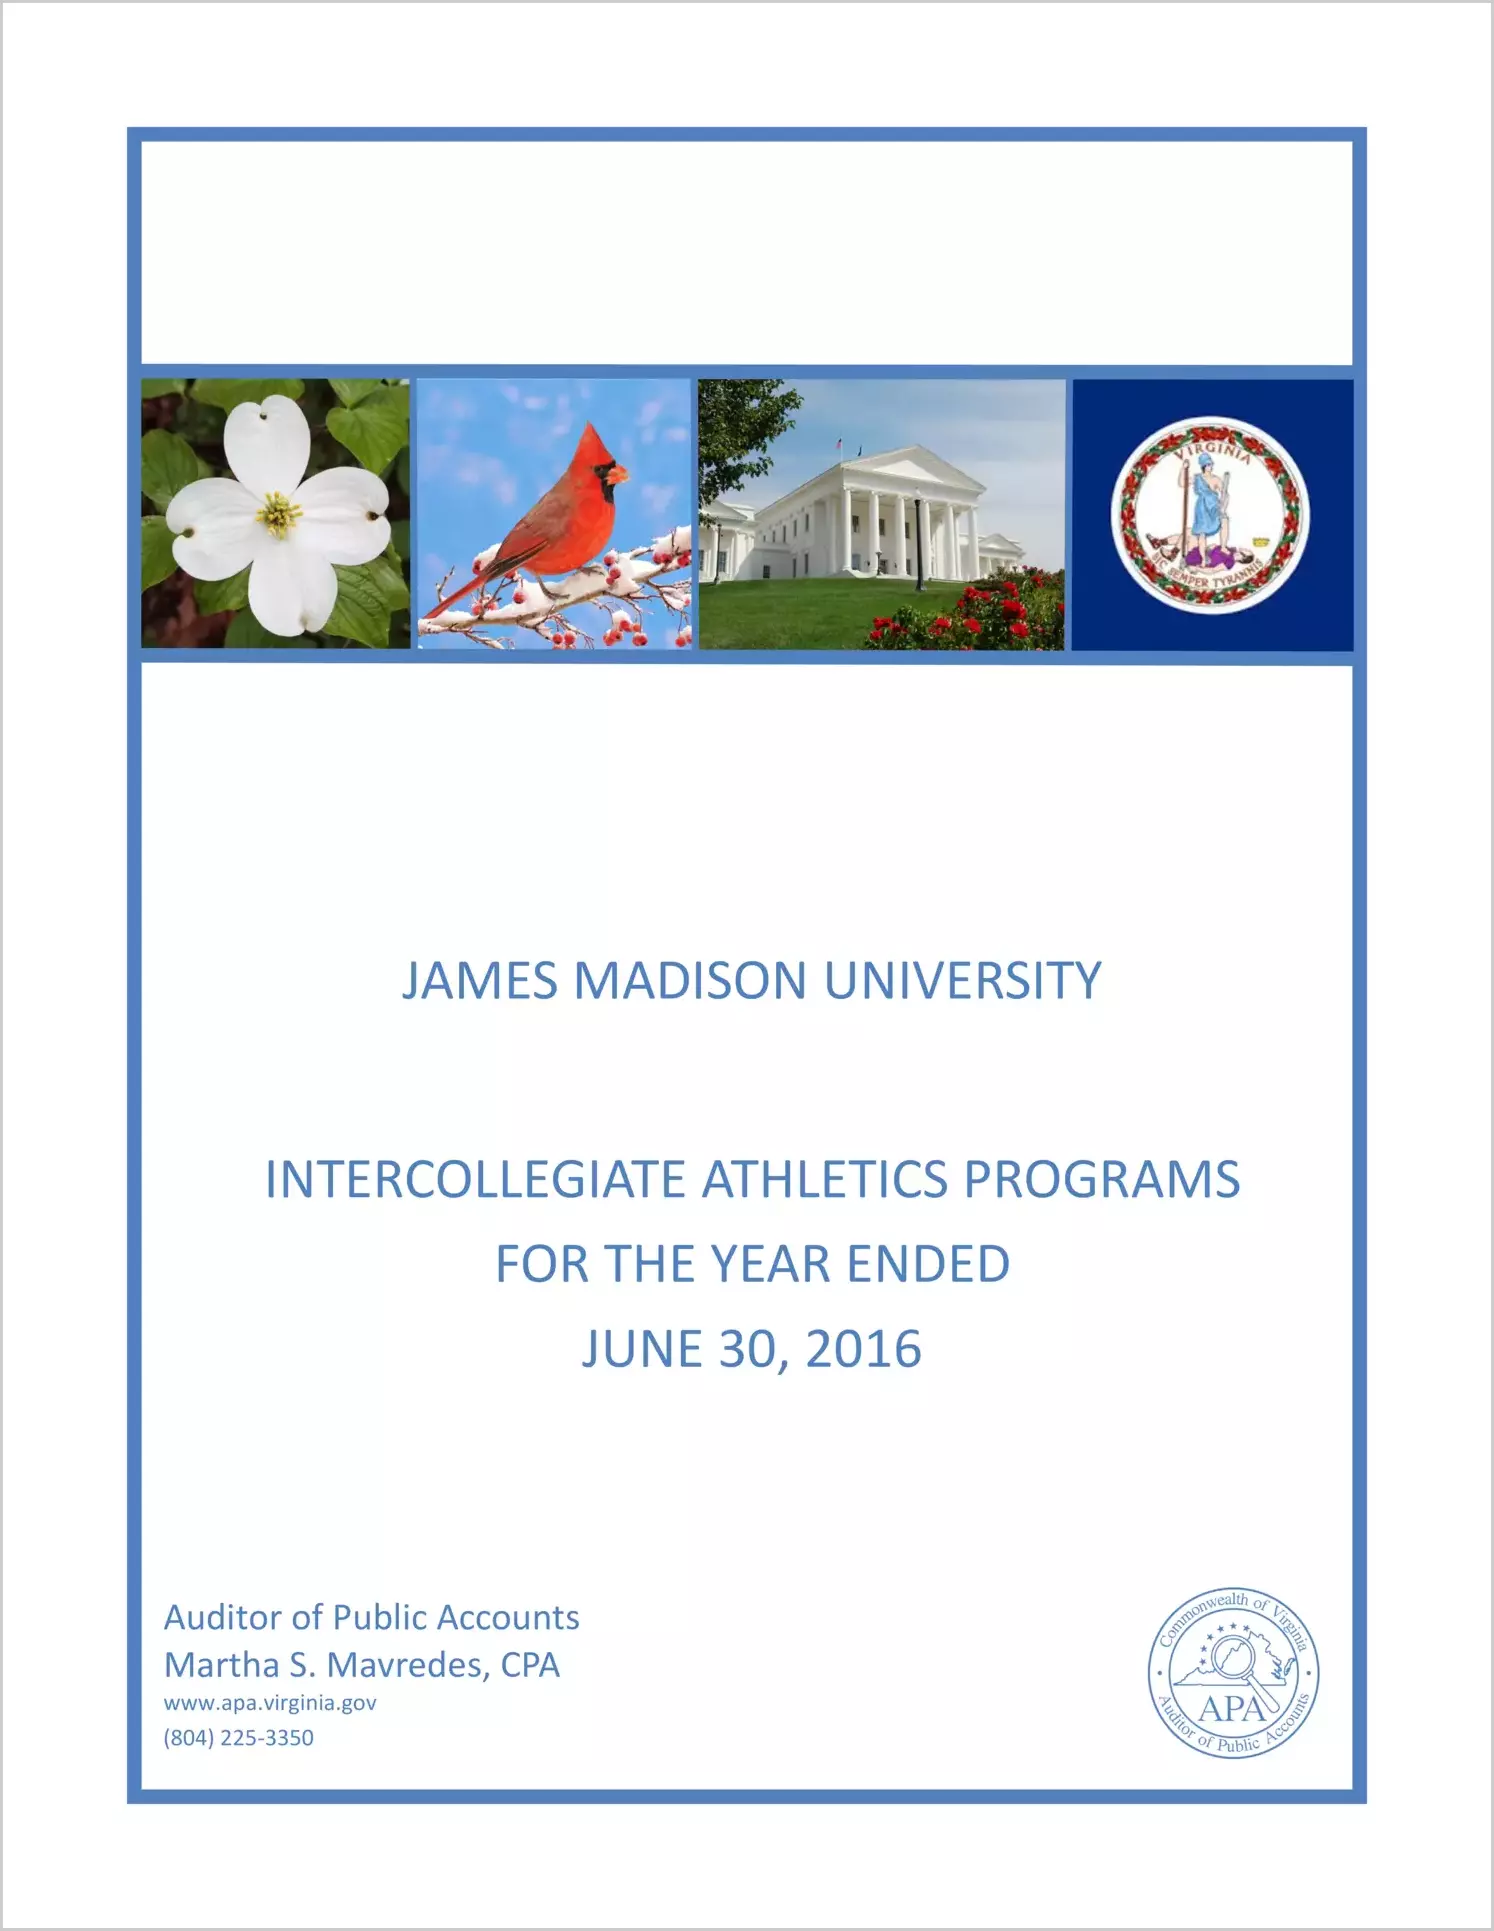 James Madison University Intercollegiate Athletics Programs for the year ended June 30, 2016